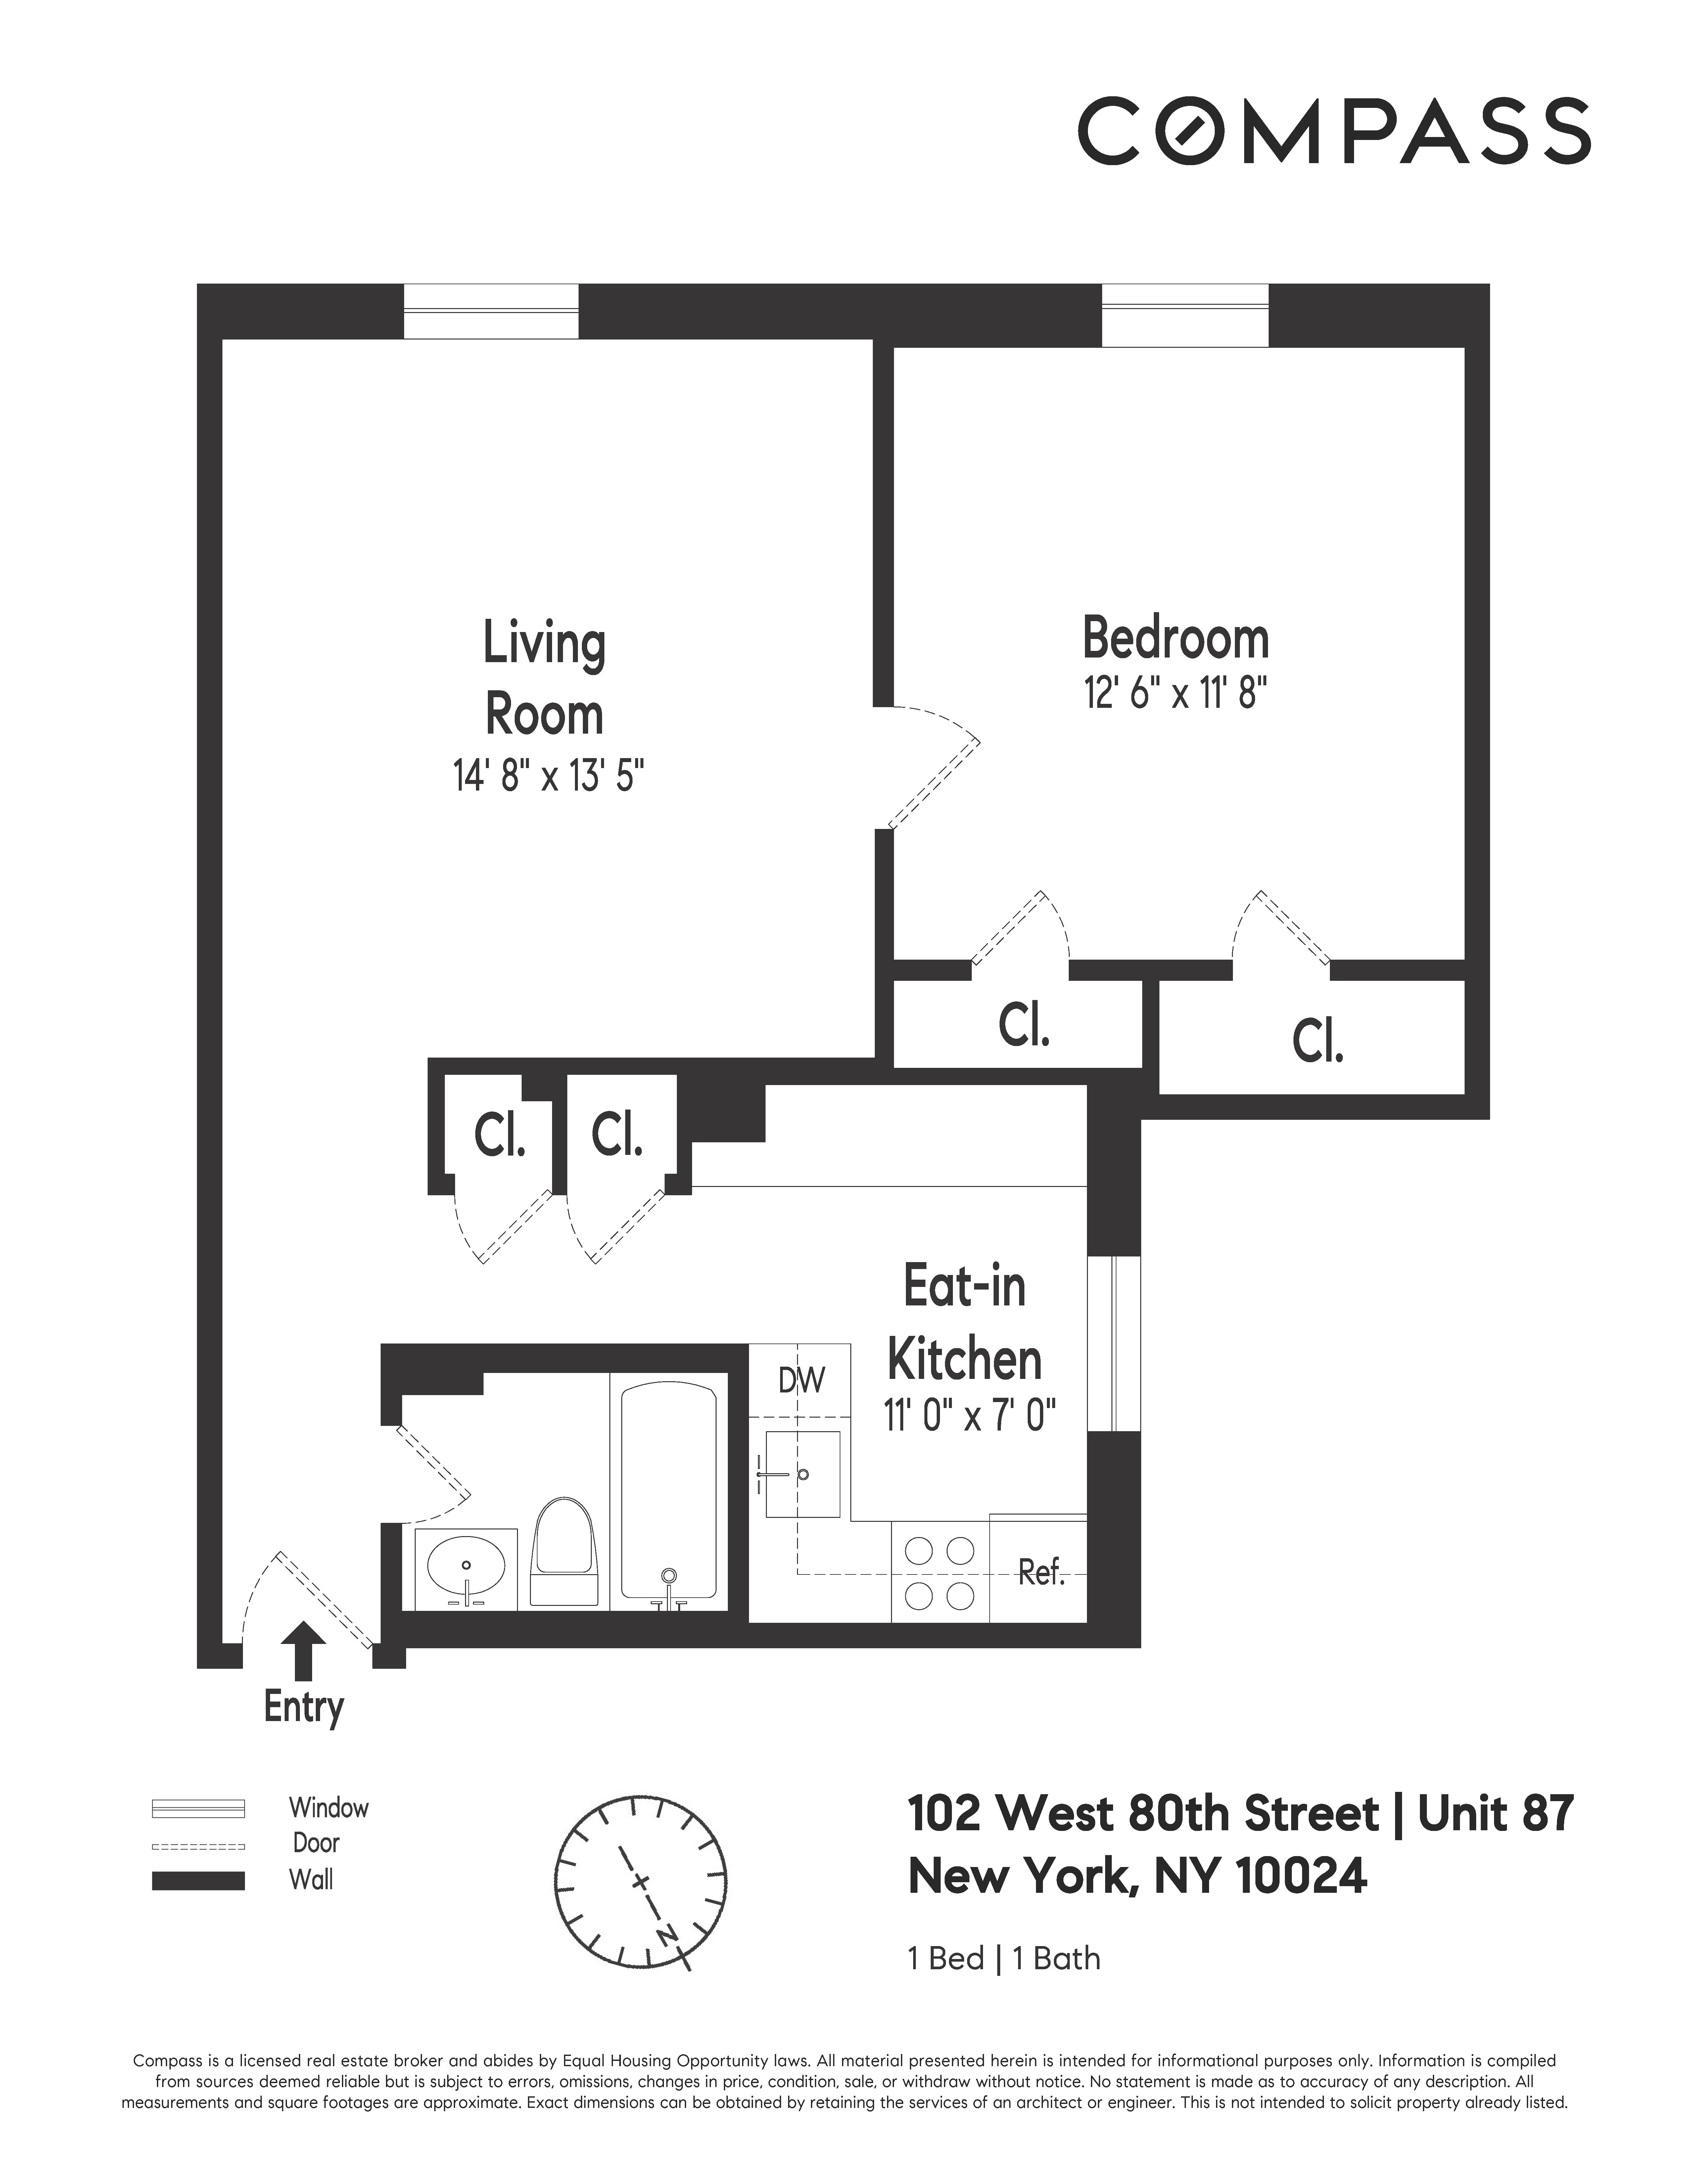 Floorplan for 102 West 80th Street, 87